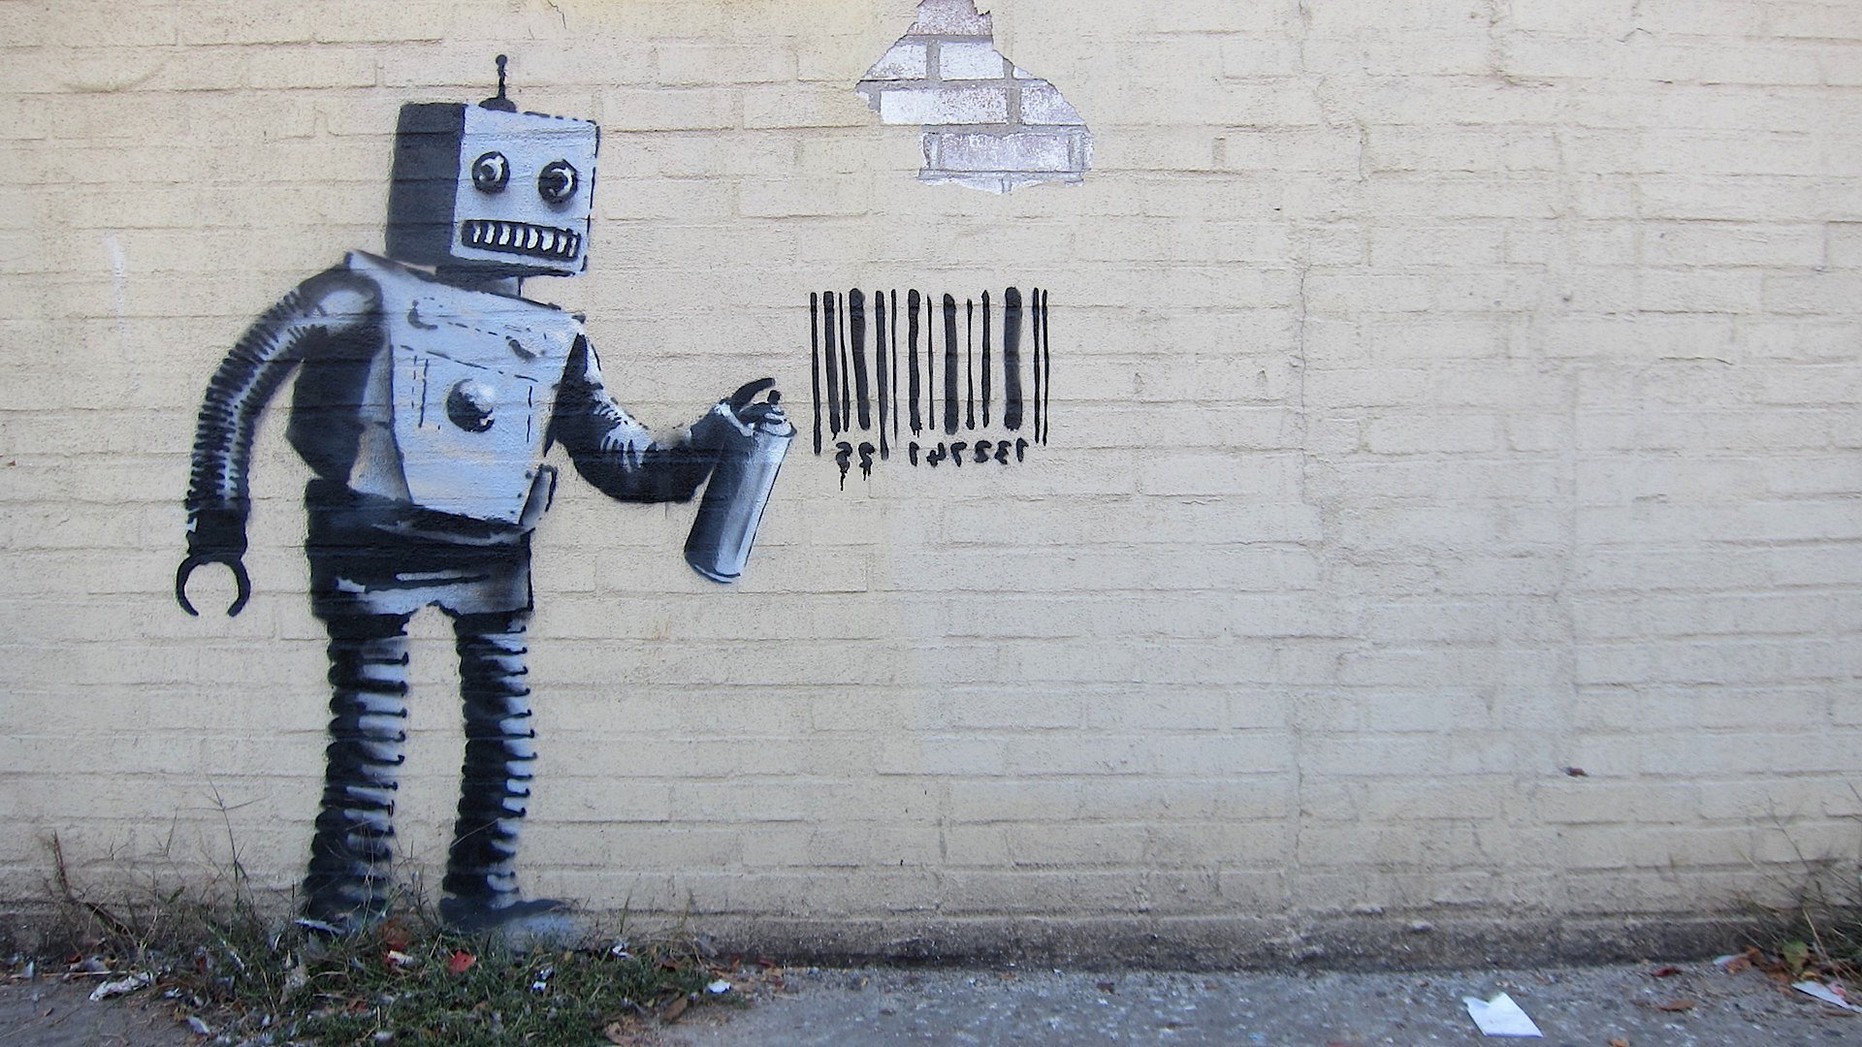 Banksy Robot Graffiti I Hadnt Seen Perfect Anime Android